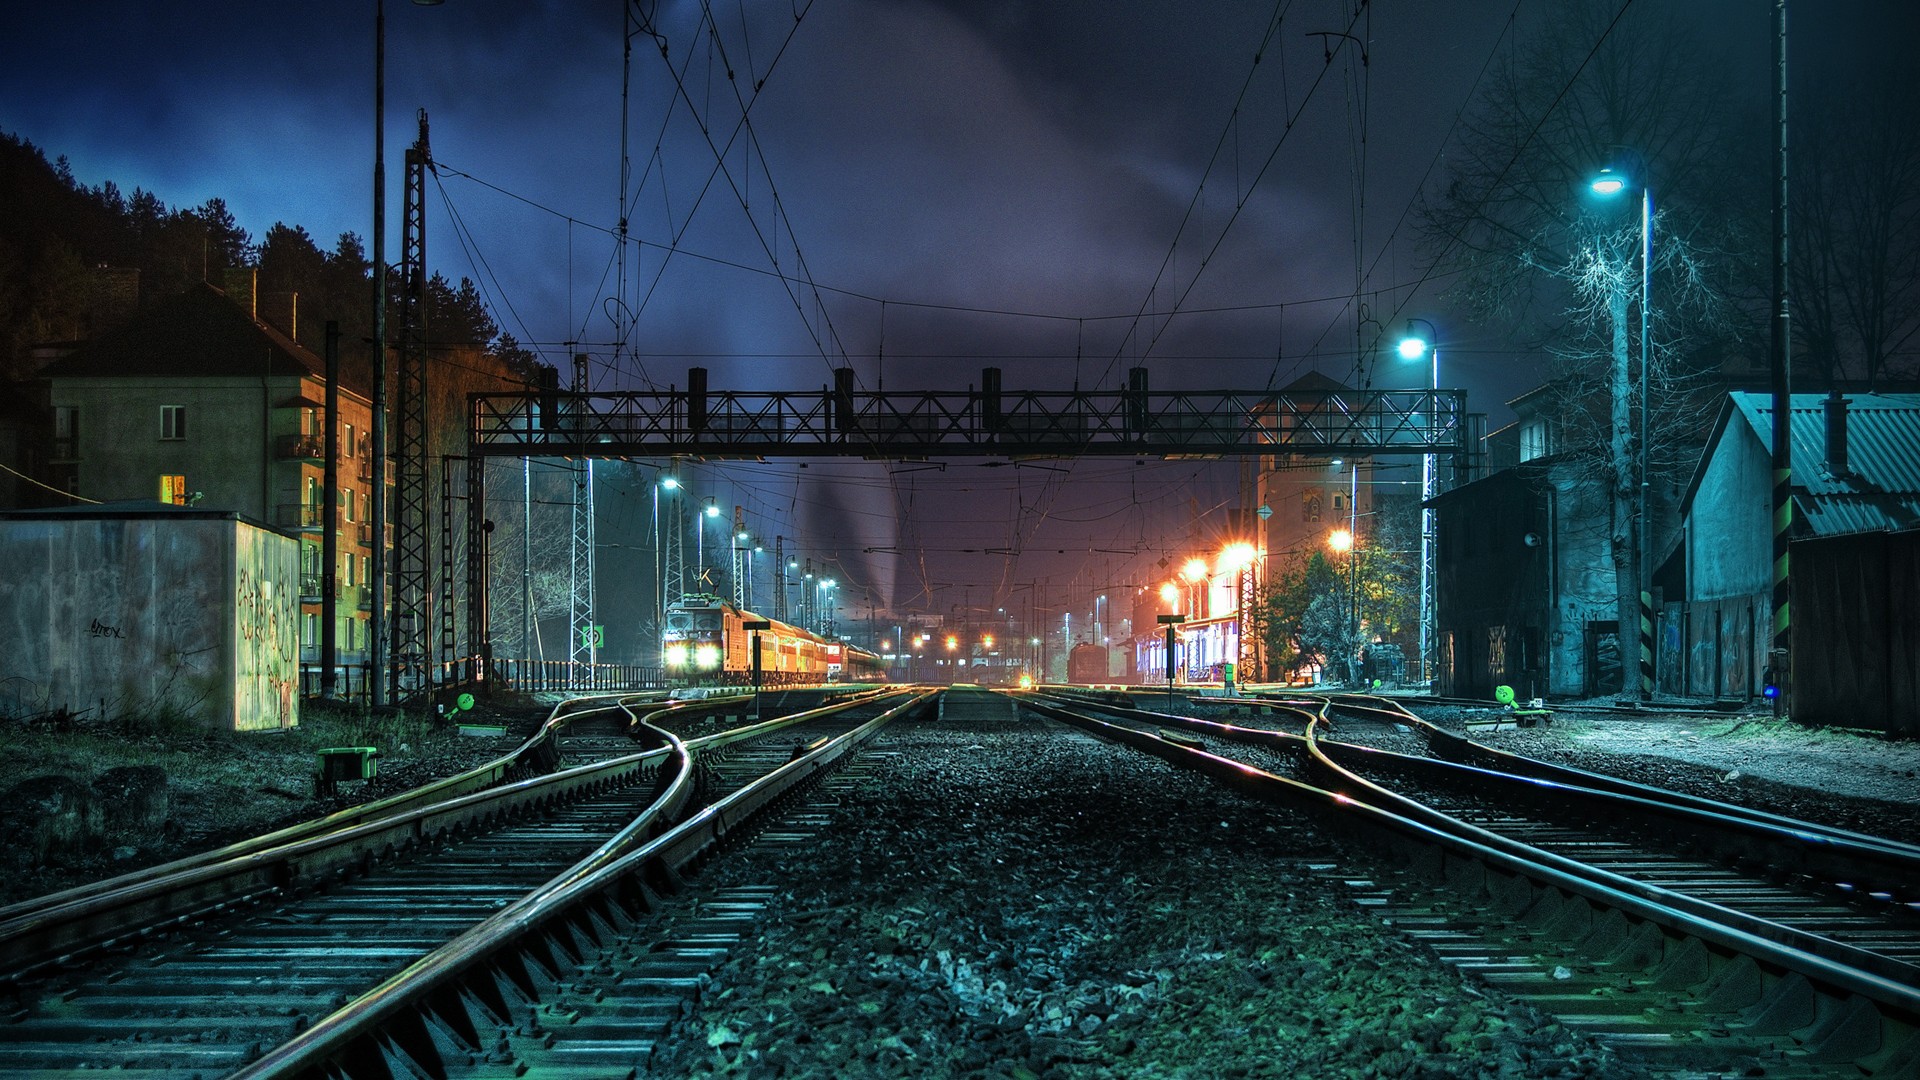 General 1920x1080 railway vehicle night train HDR railway crossing train station Slovakia low light